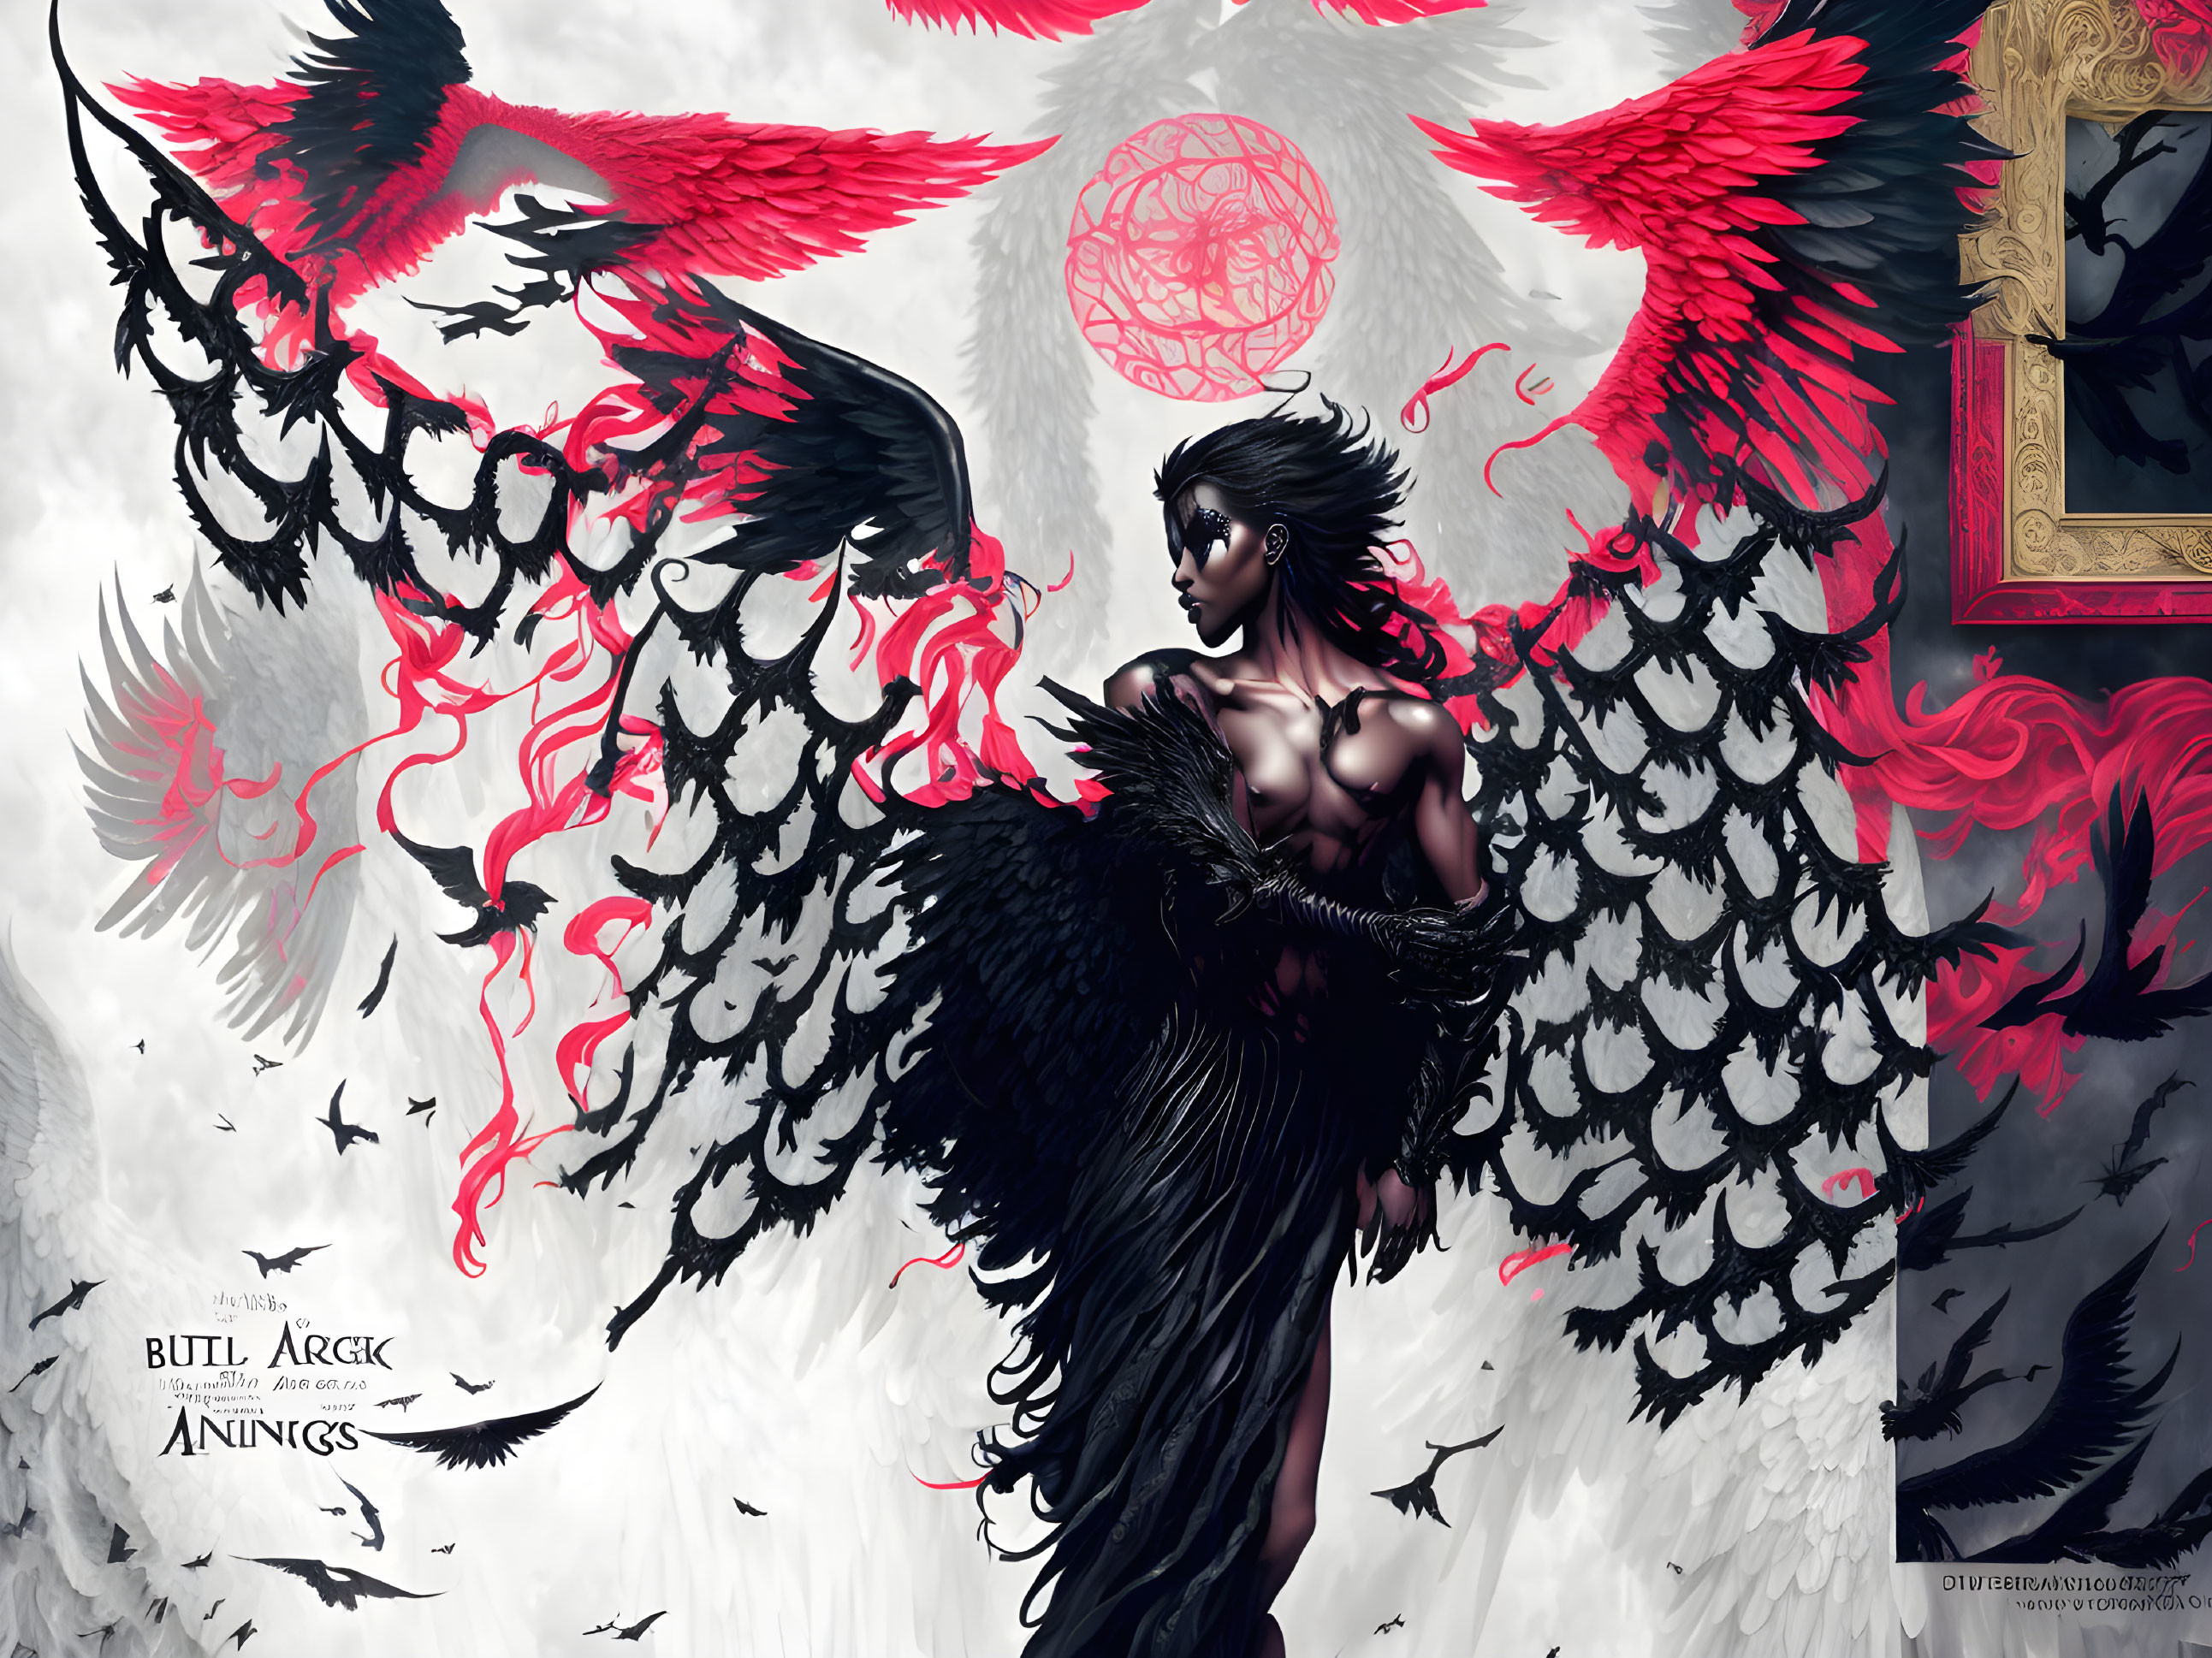 Black angel of death spreads her wings